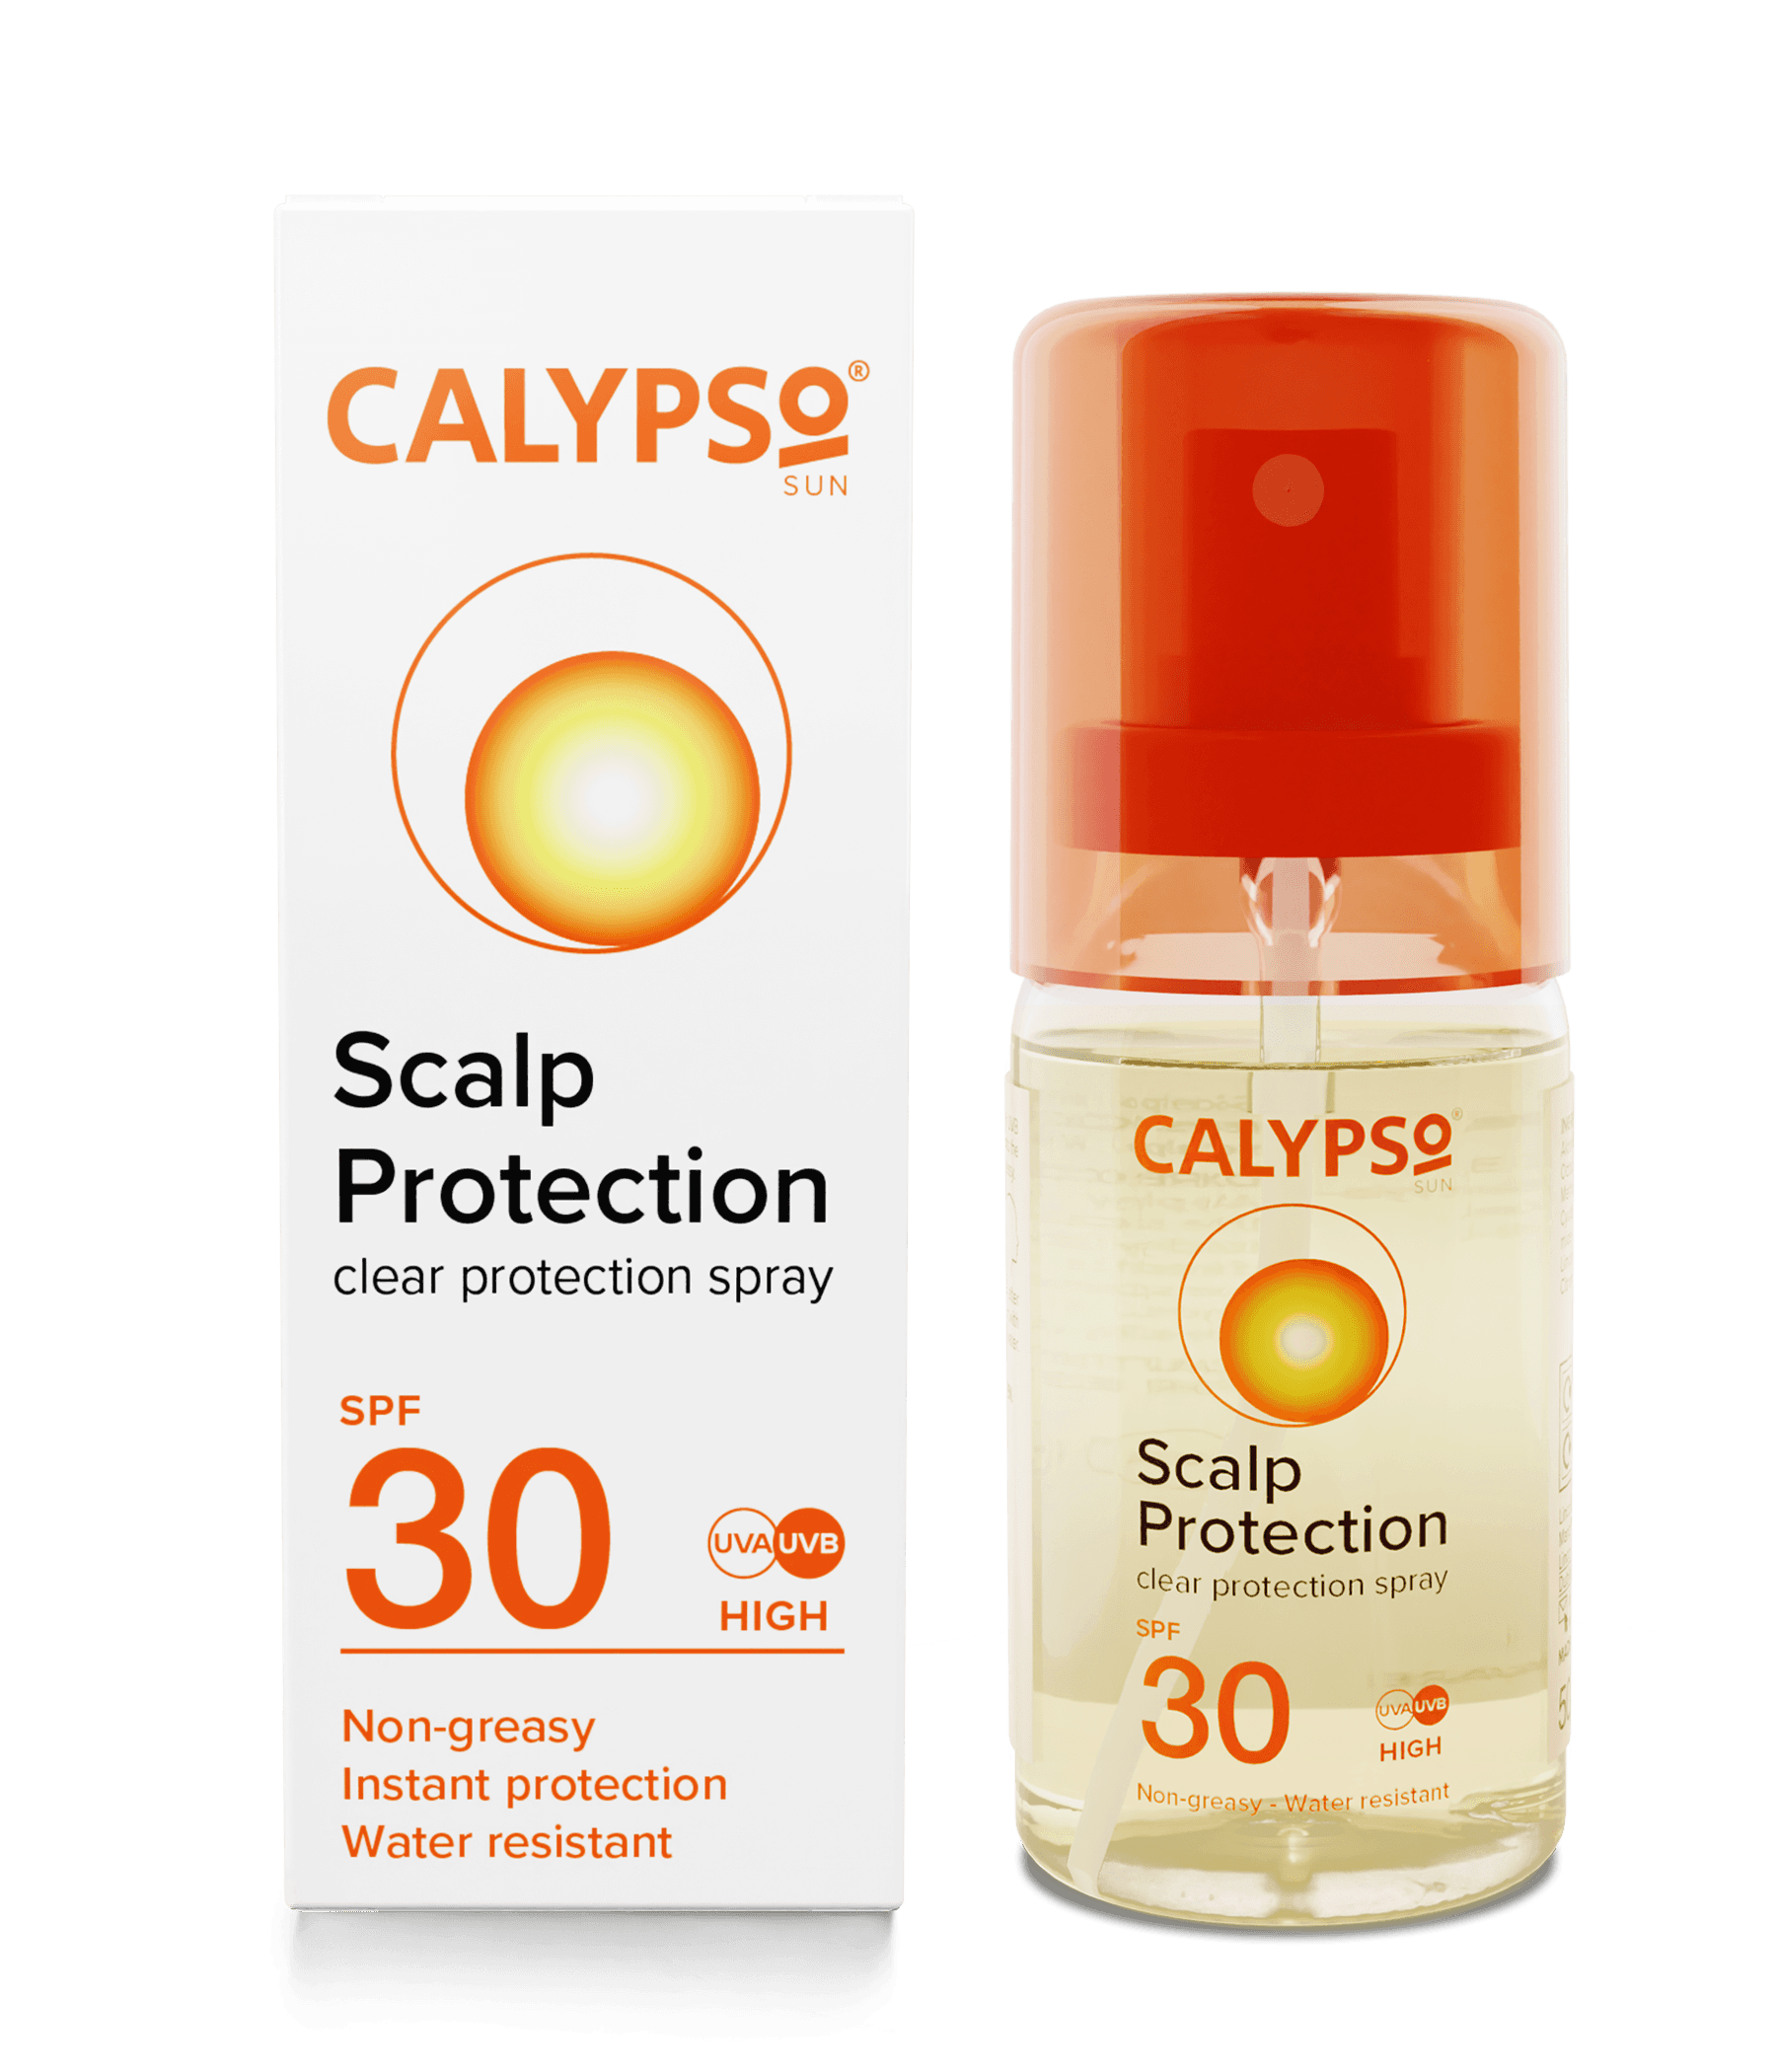 Calypso Scalp Protection spf30 box and bottle new logo